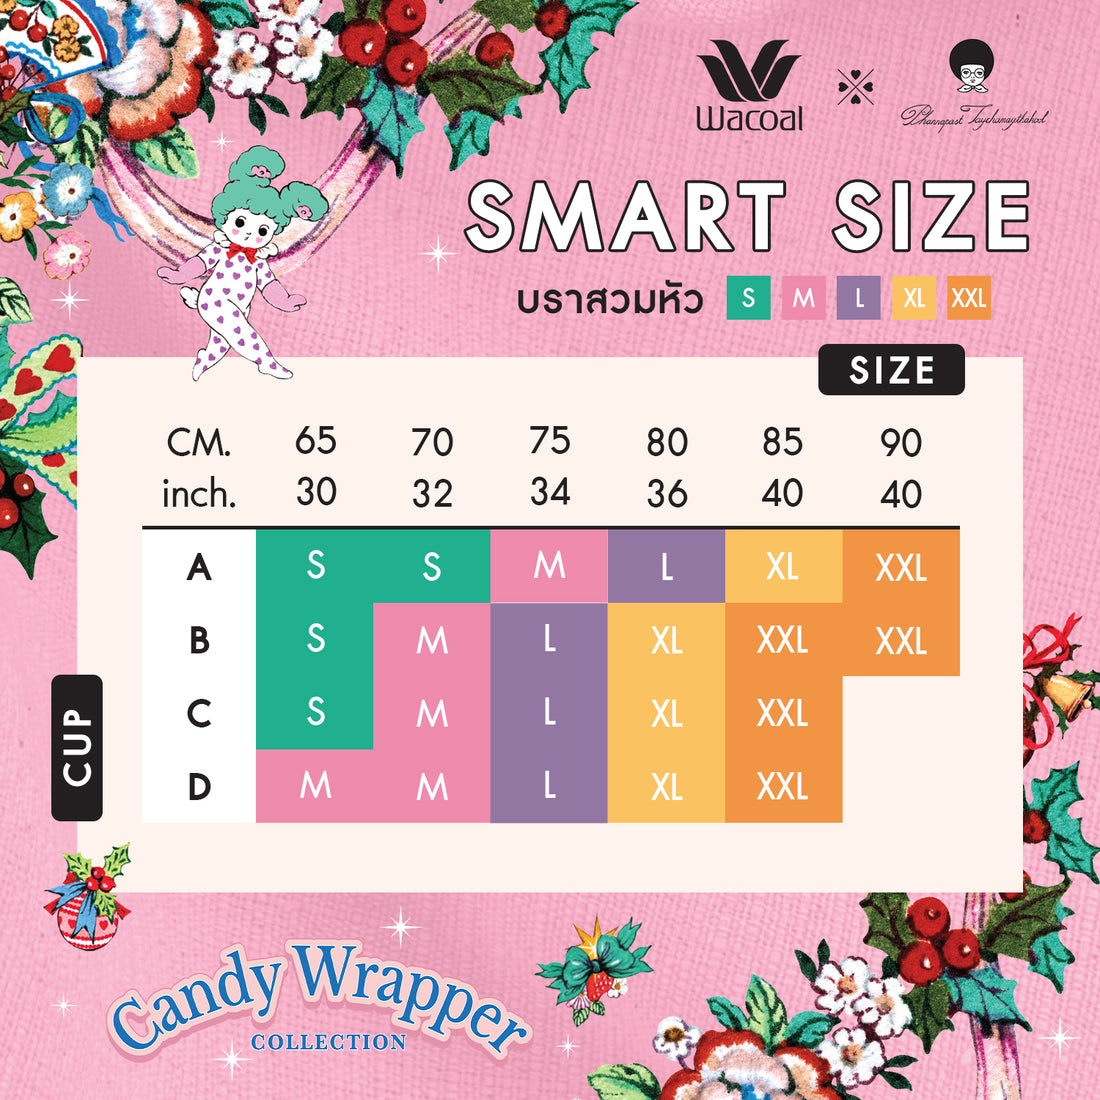 Wacoal x Phannapast: “Candy Wrappers Collection”  บังทรงสวมหัวพิมพ์ลาย Ranibow Sue รุ่น WH4N06  สีดำ (BL)